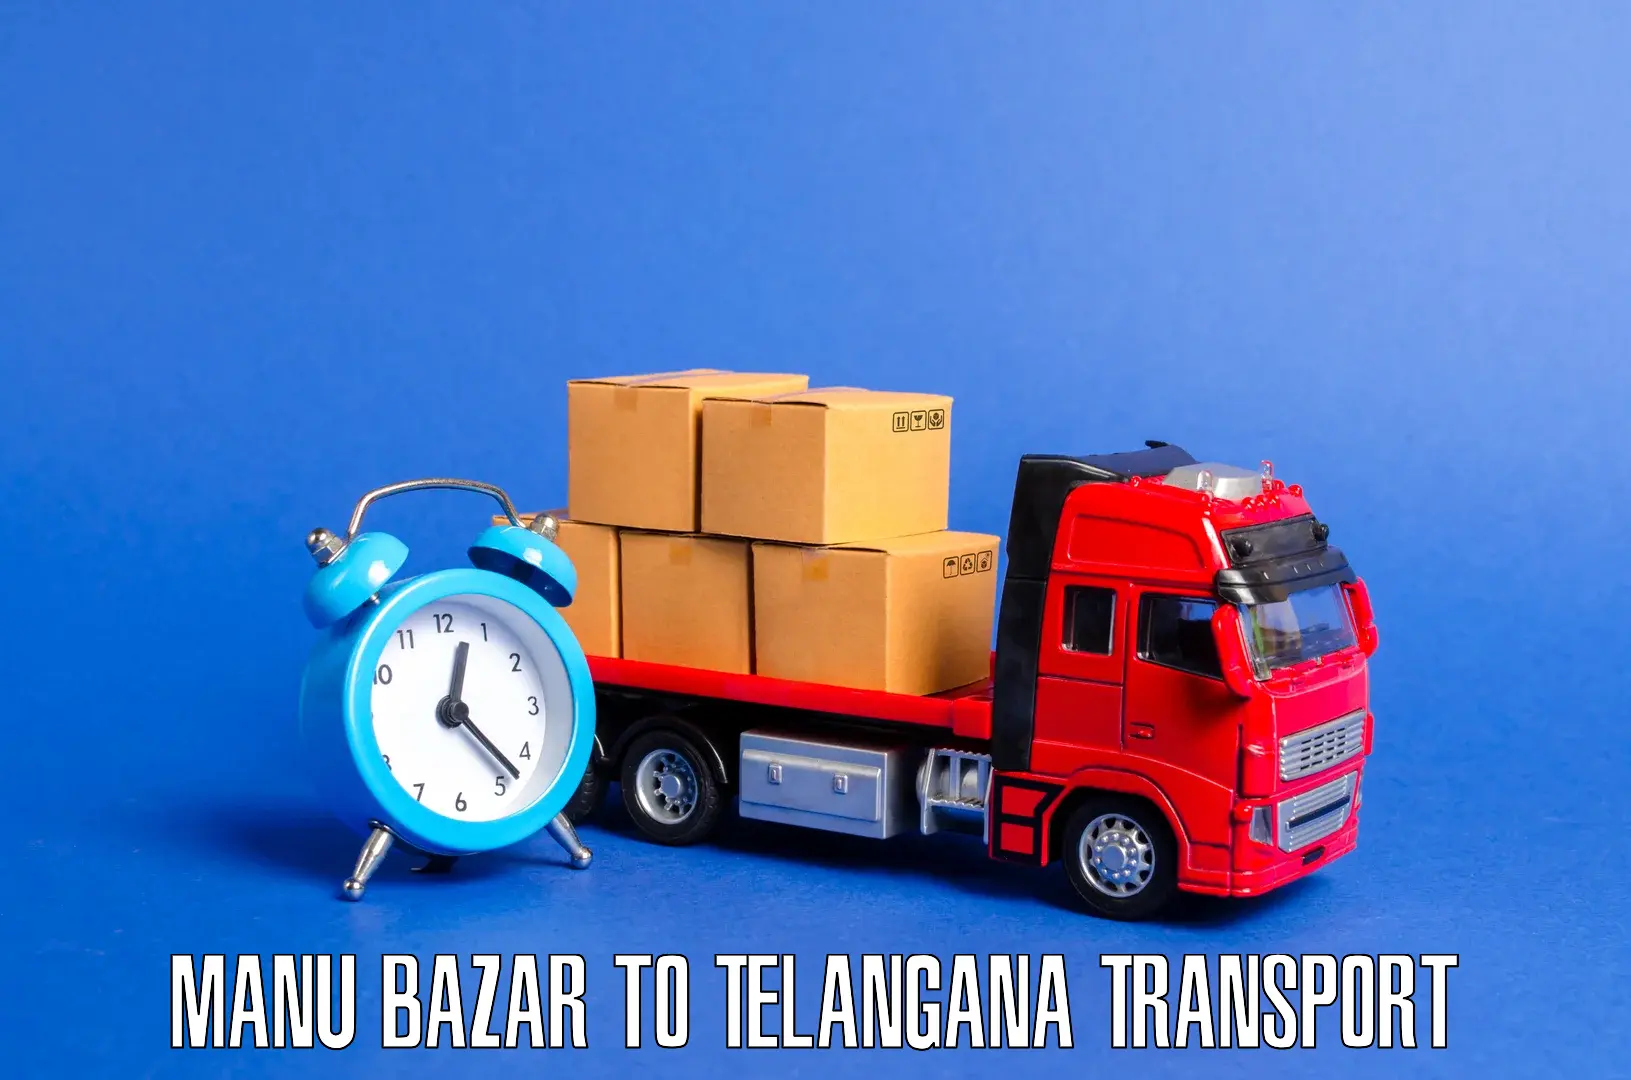 Land transport services in Manu Bazar to Balanagar